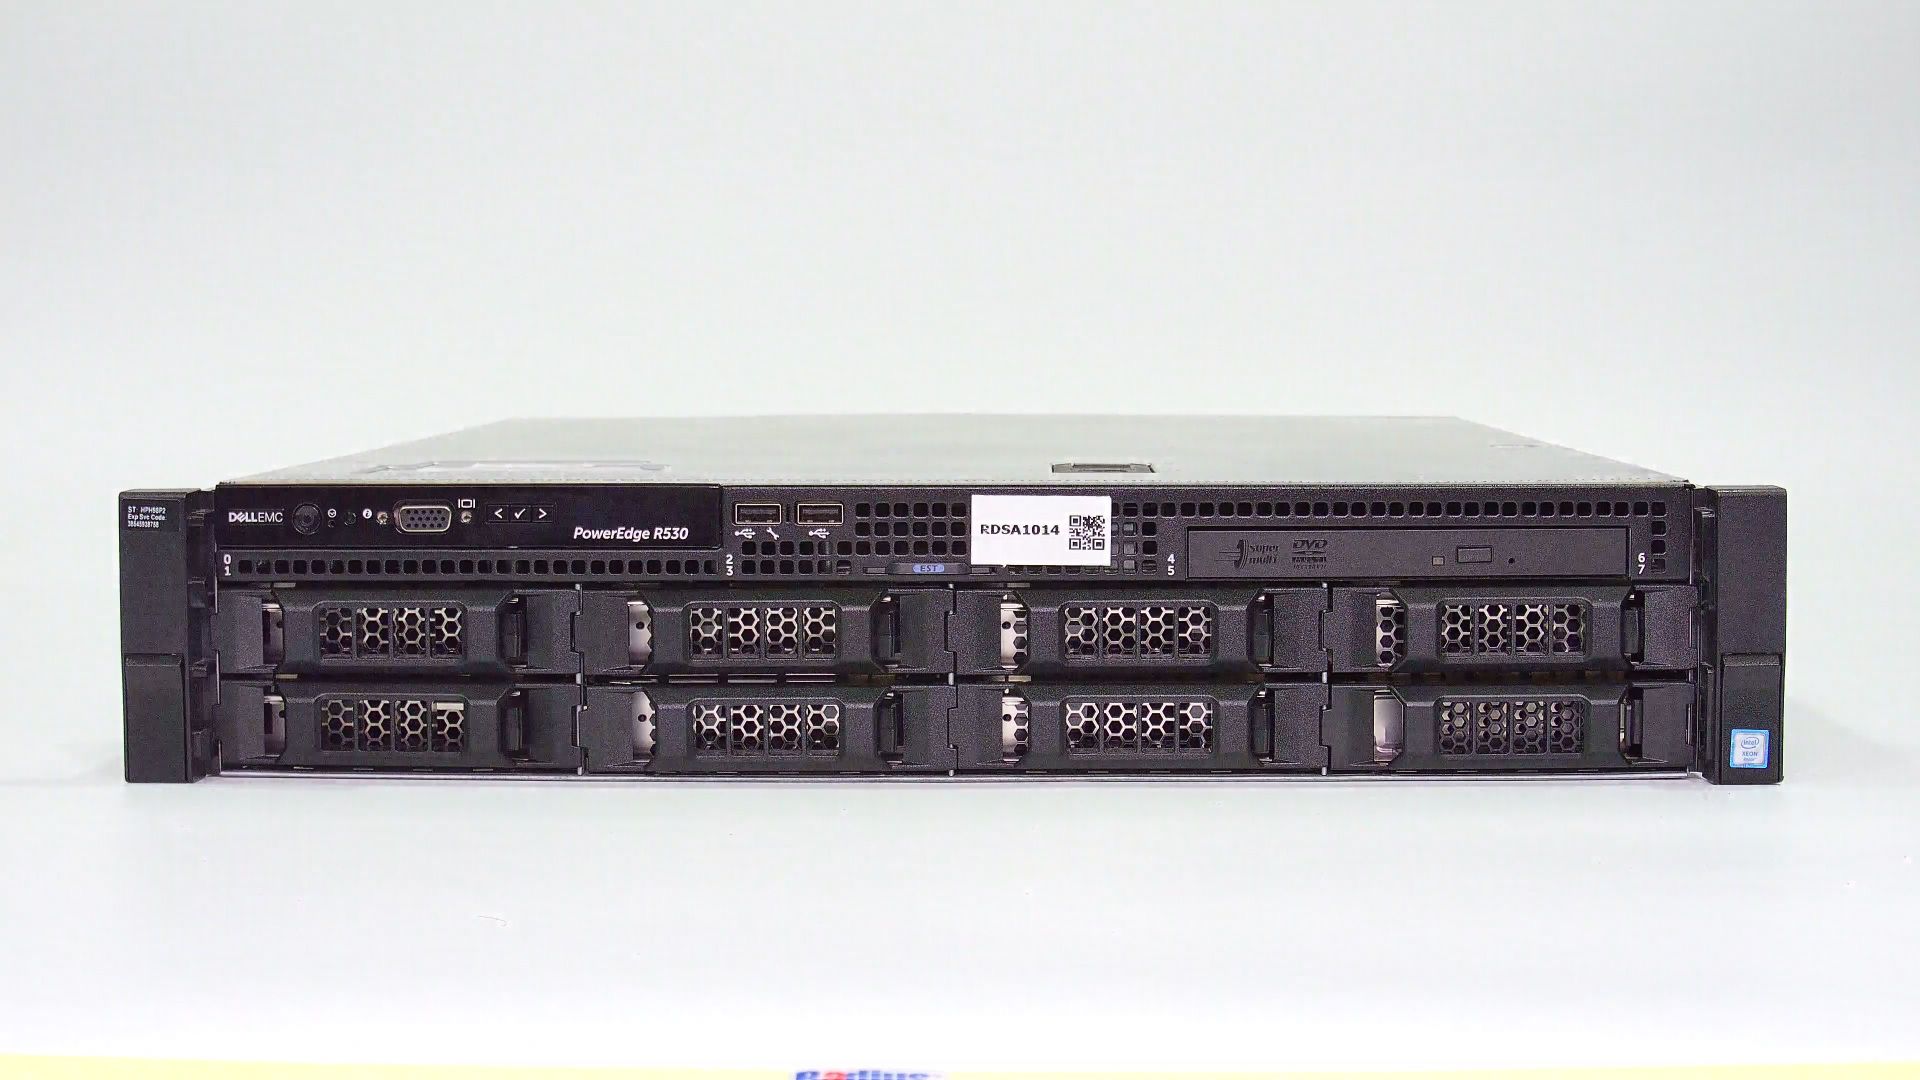 DELL Poweredge R530 Server